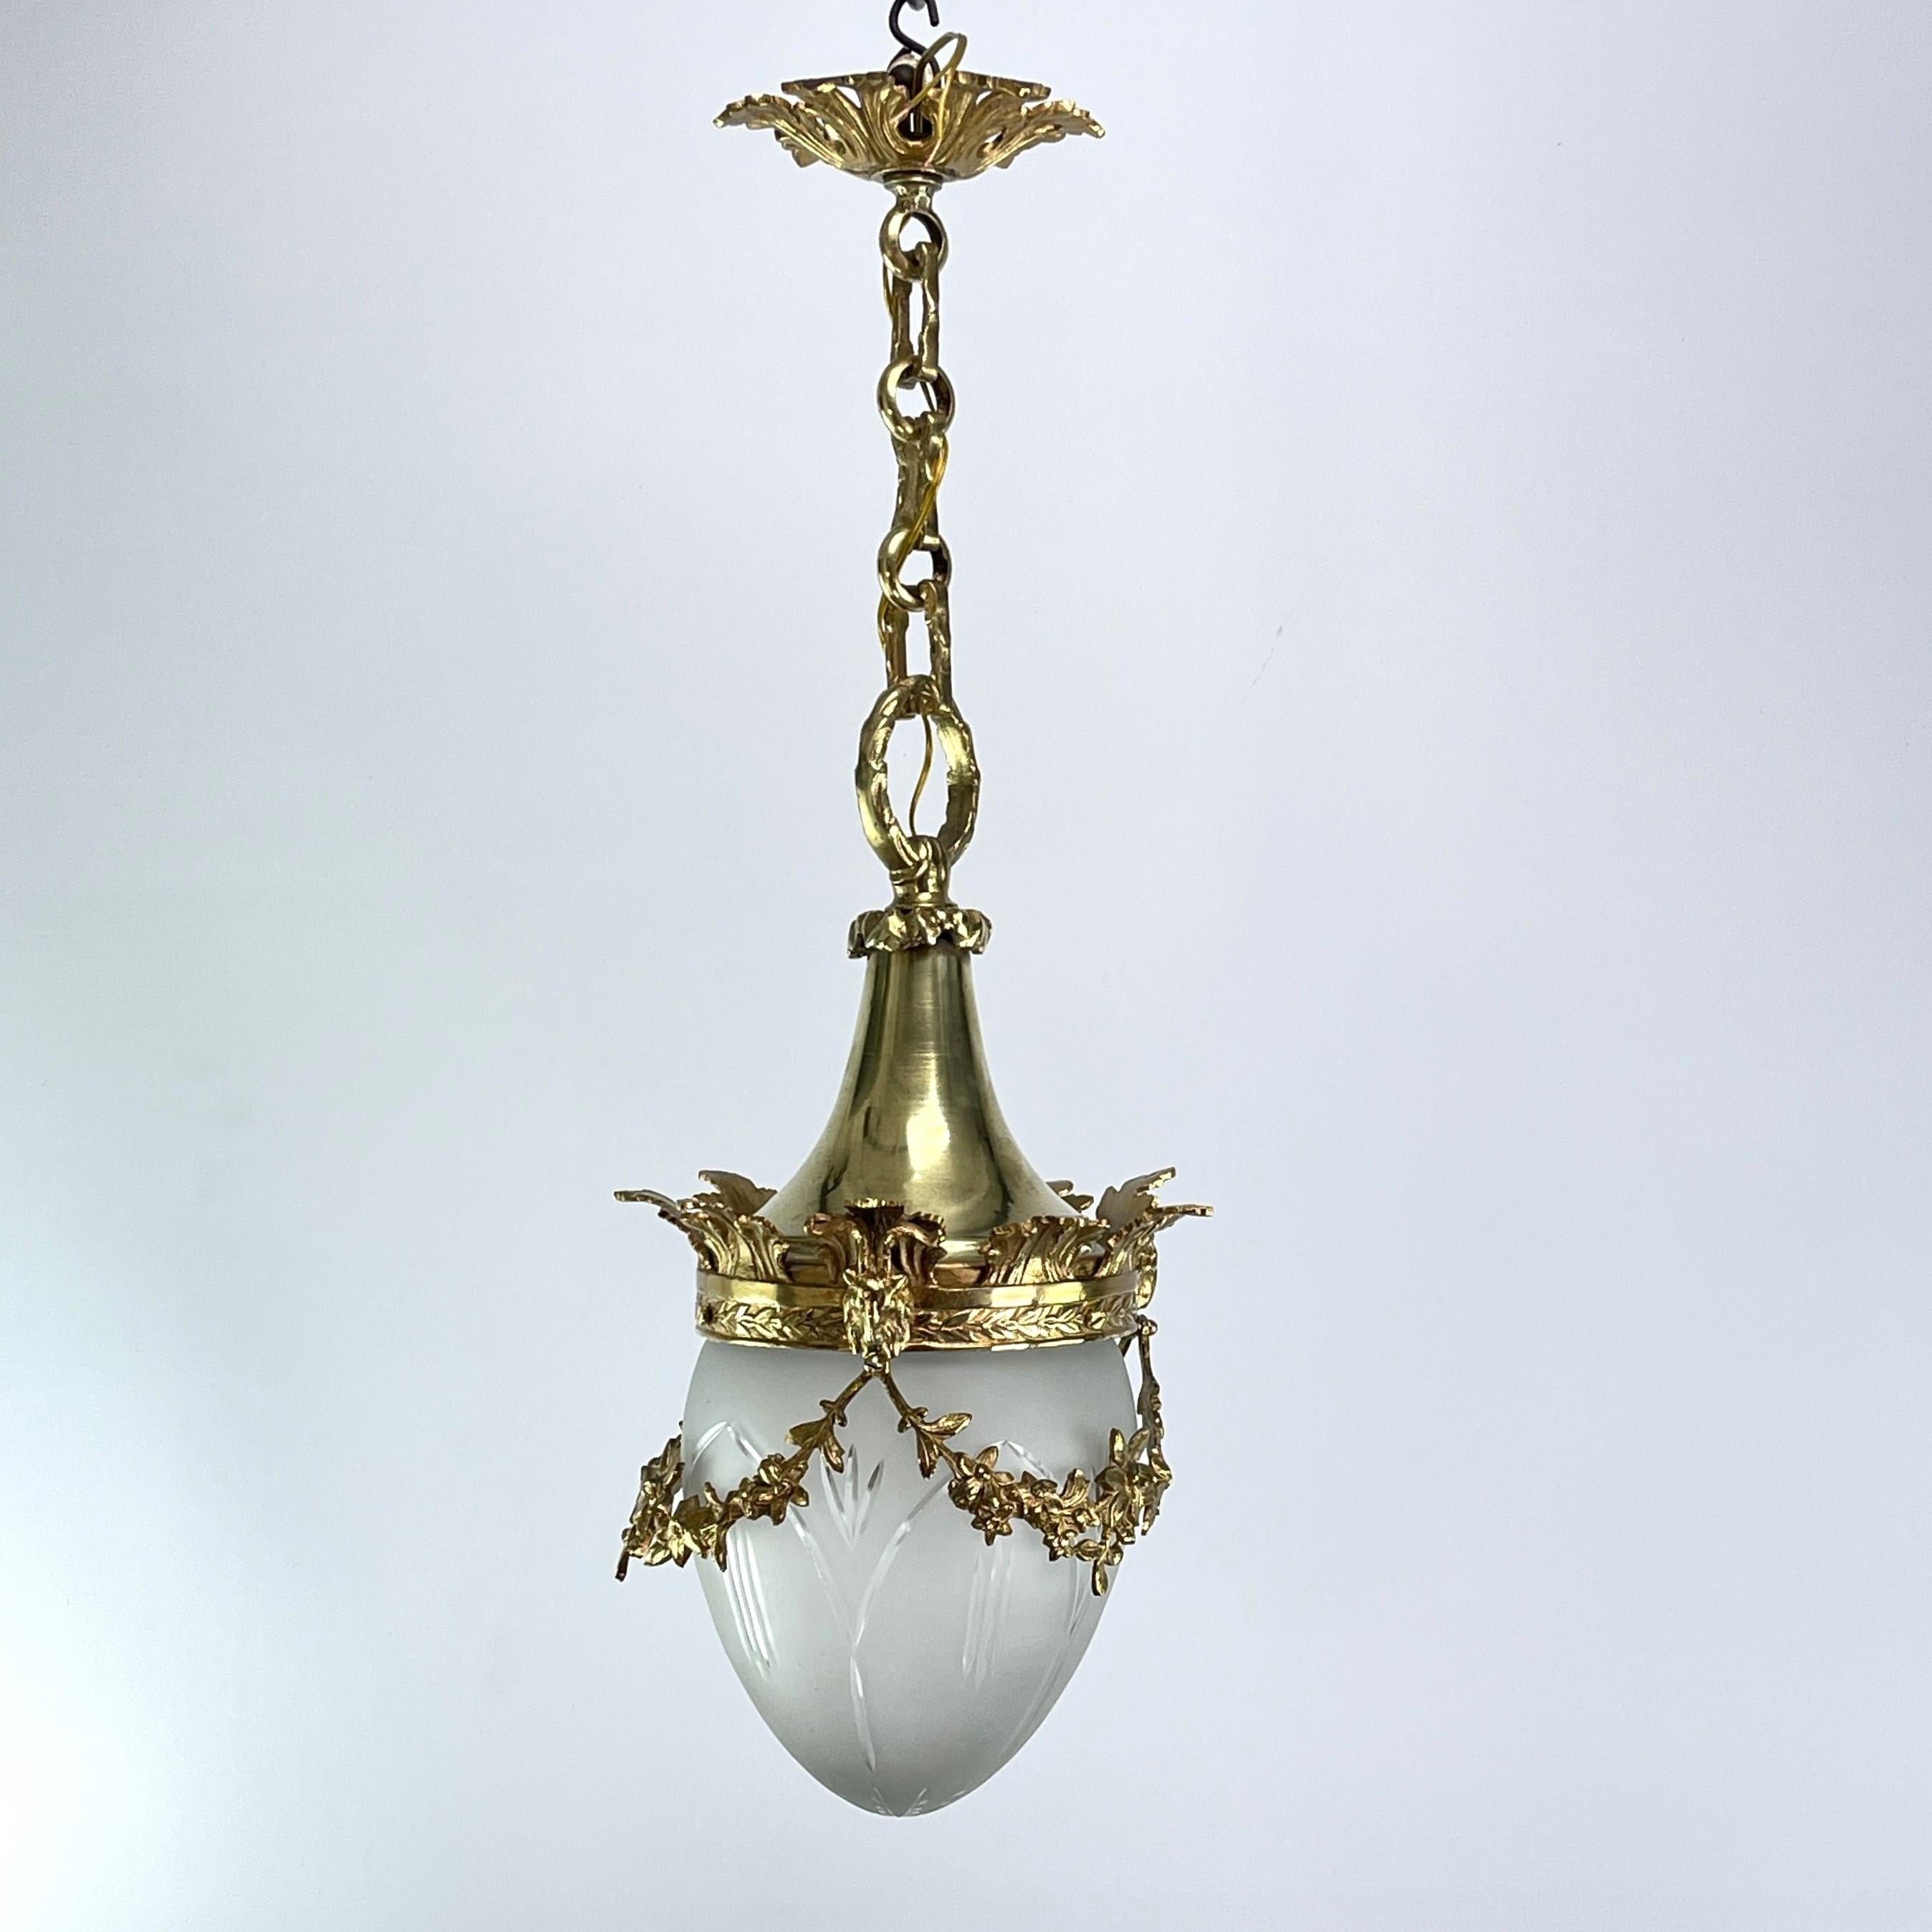 French Art Nouveau Hanging Lamp Bronze, Teardrop Shape, 1900s